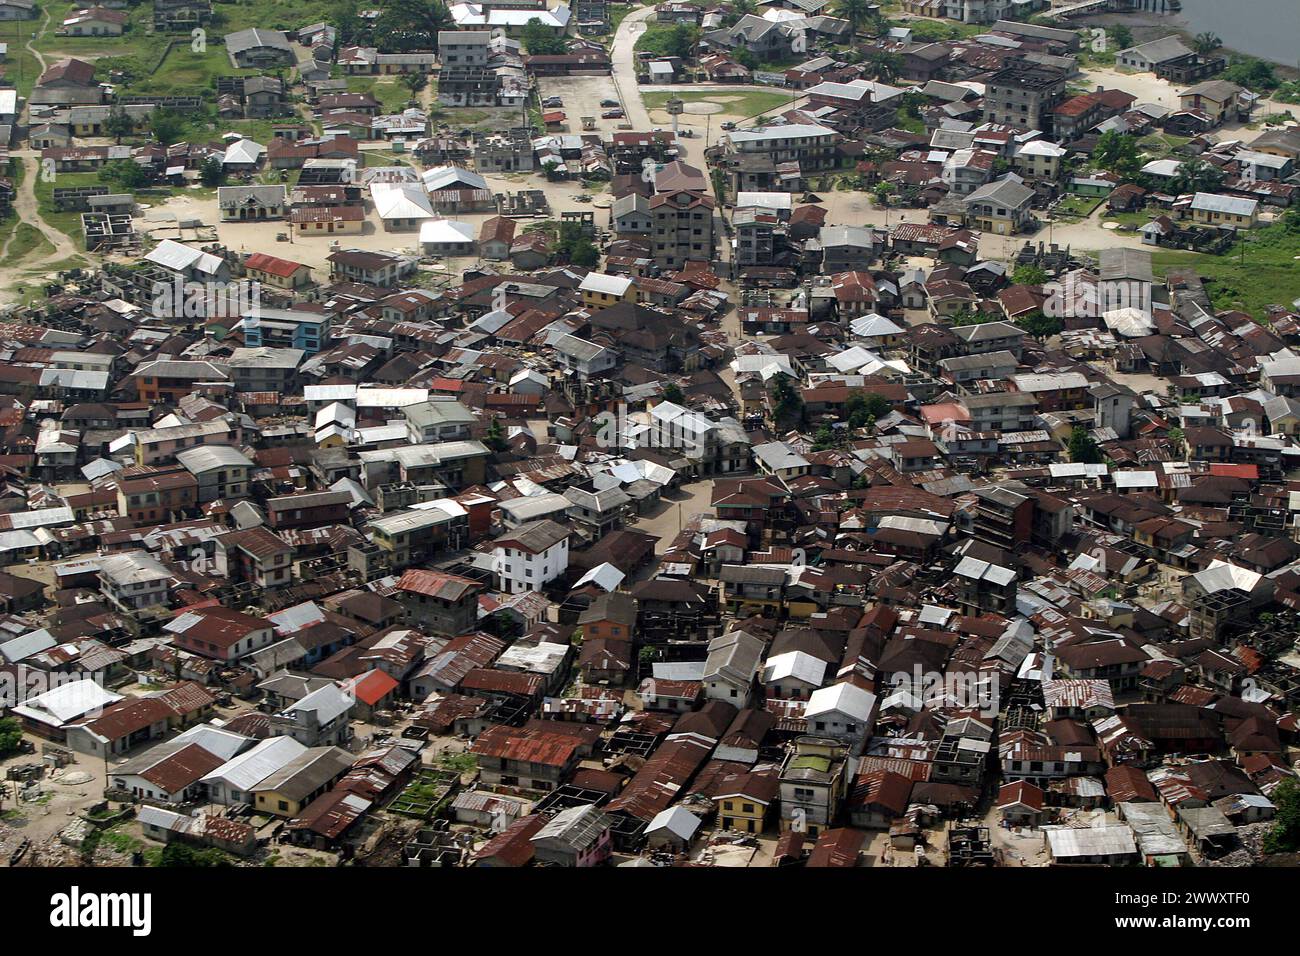 Die Ölkatastrophe im Nigerdelta. NGA, Nigeria. Ogoniland. Eine Wohnsiedlung im Ogoniland. Foto Stock